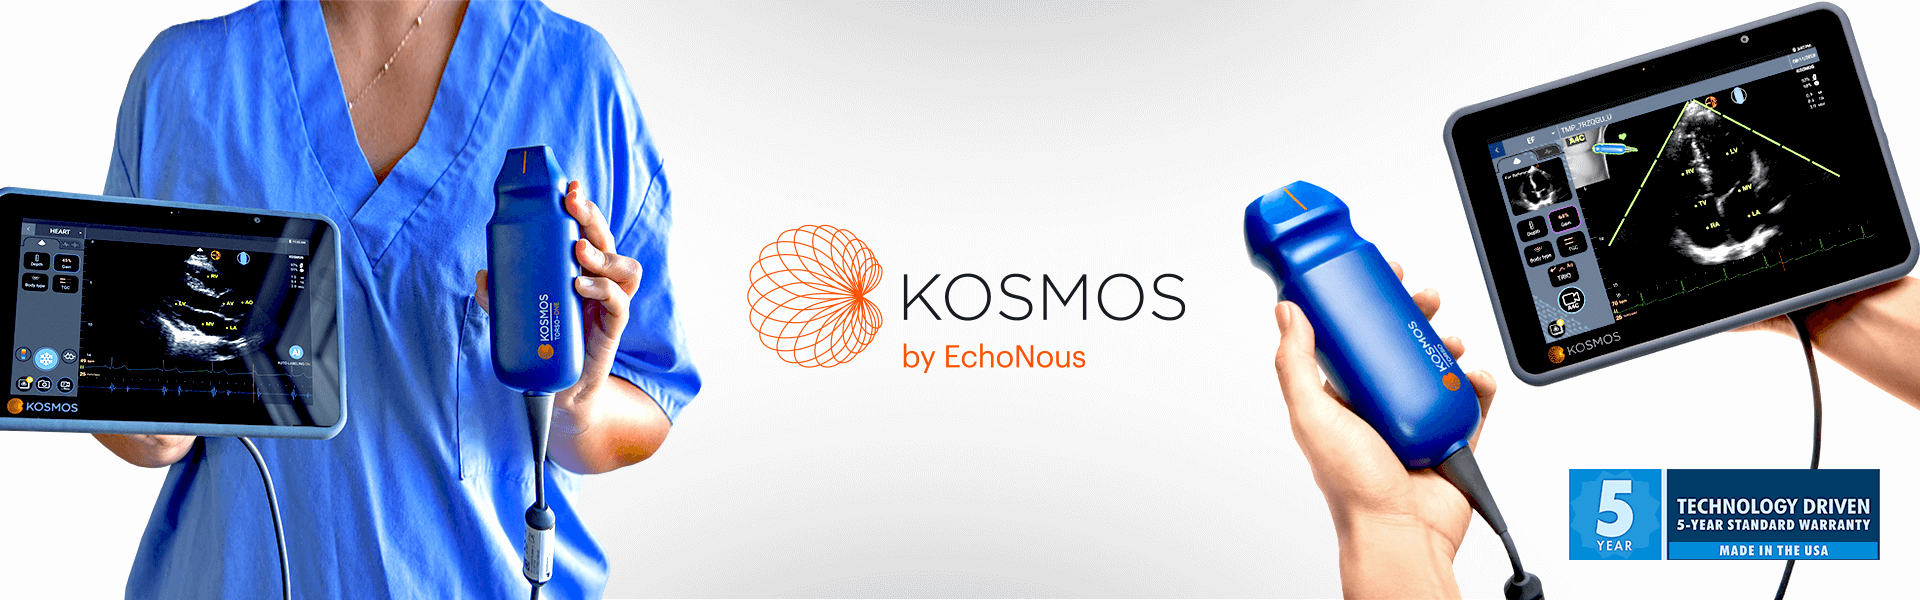 Kosmos By Echonous - Brasil Médica Technologies